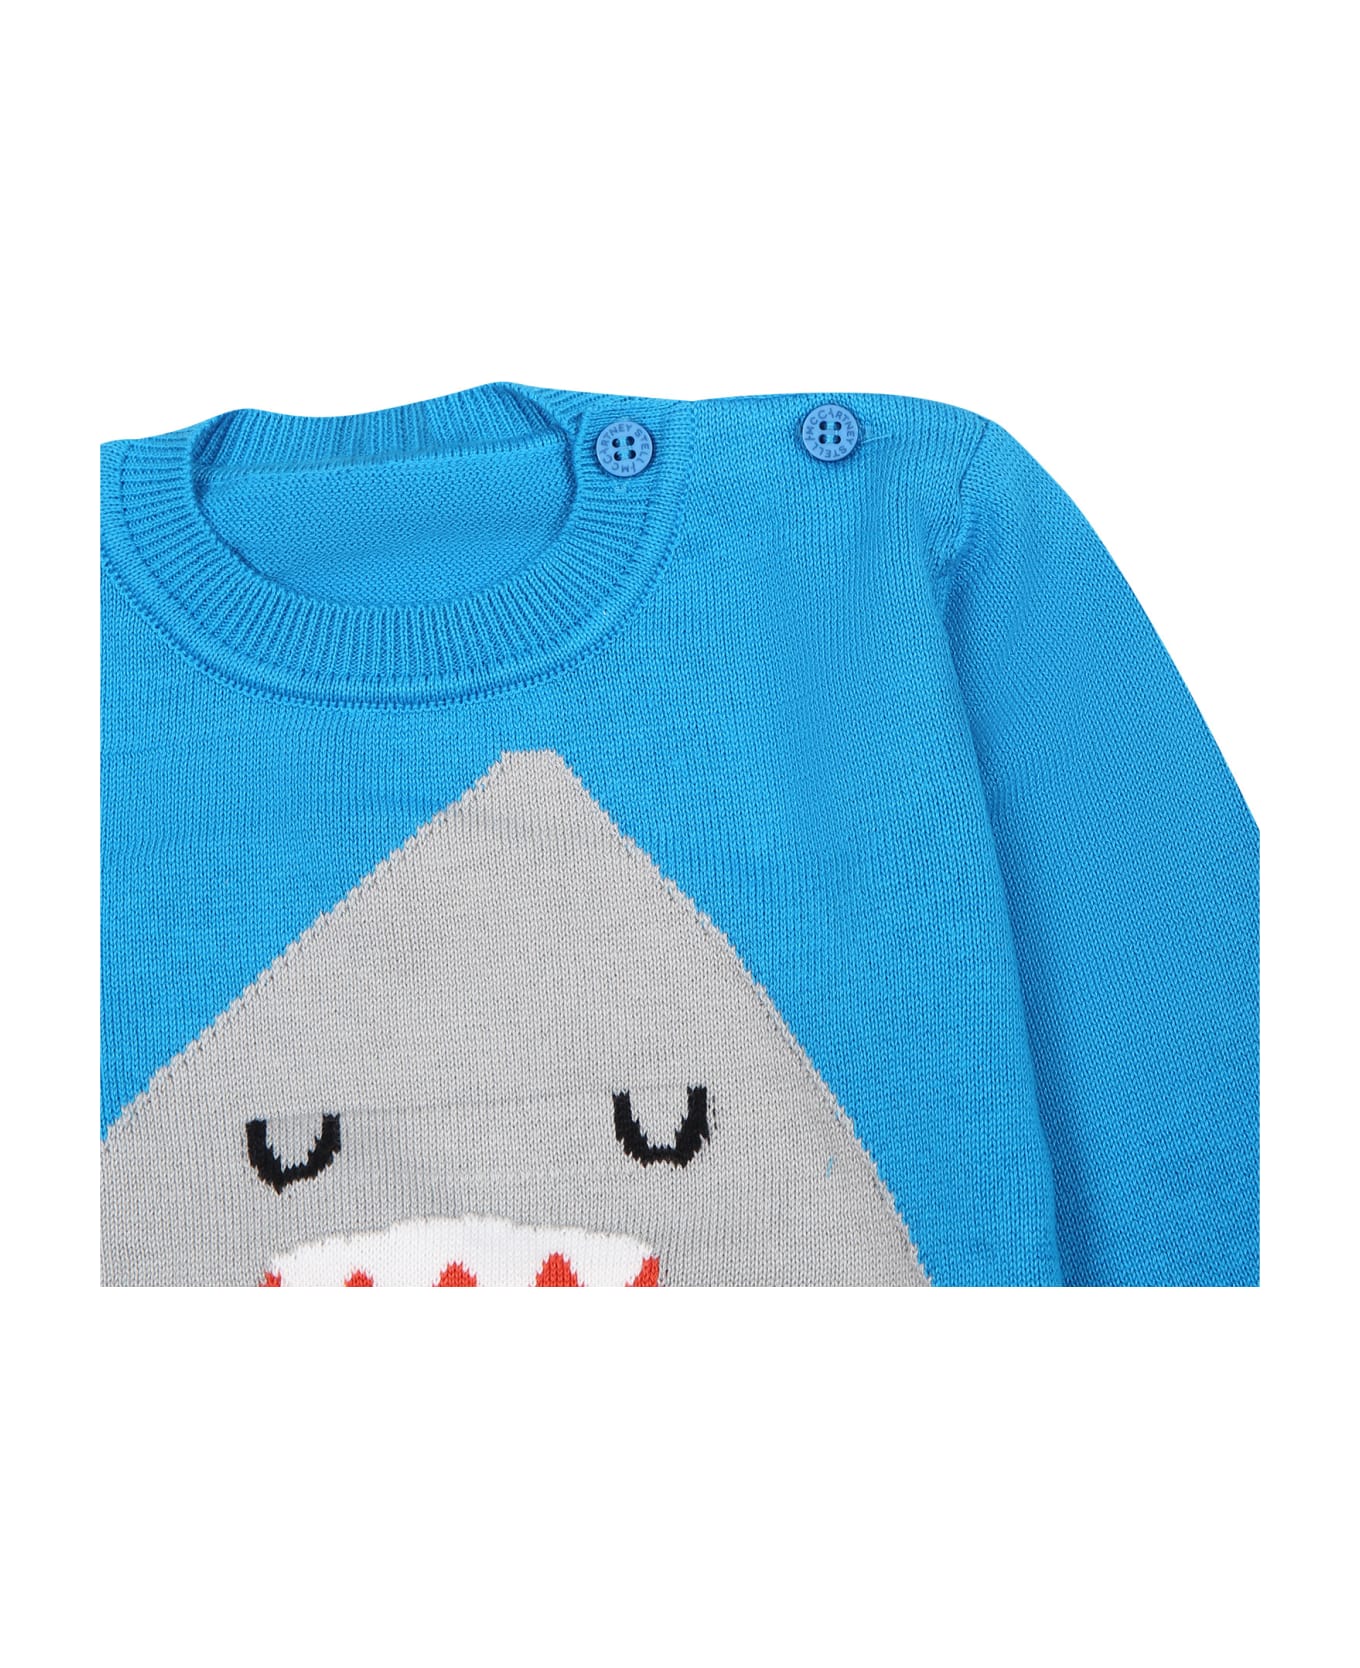 Stella McCartney Kids Light Blue Sweater For Baby Boy With Shark - Light Blue